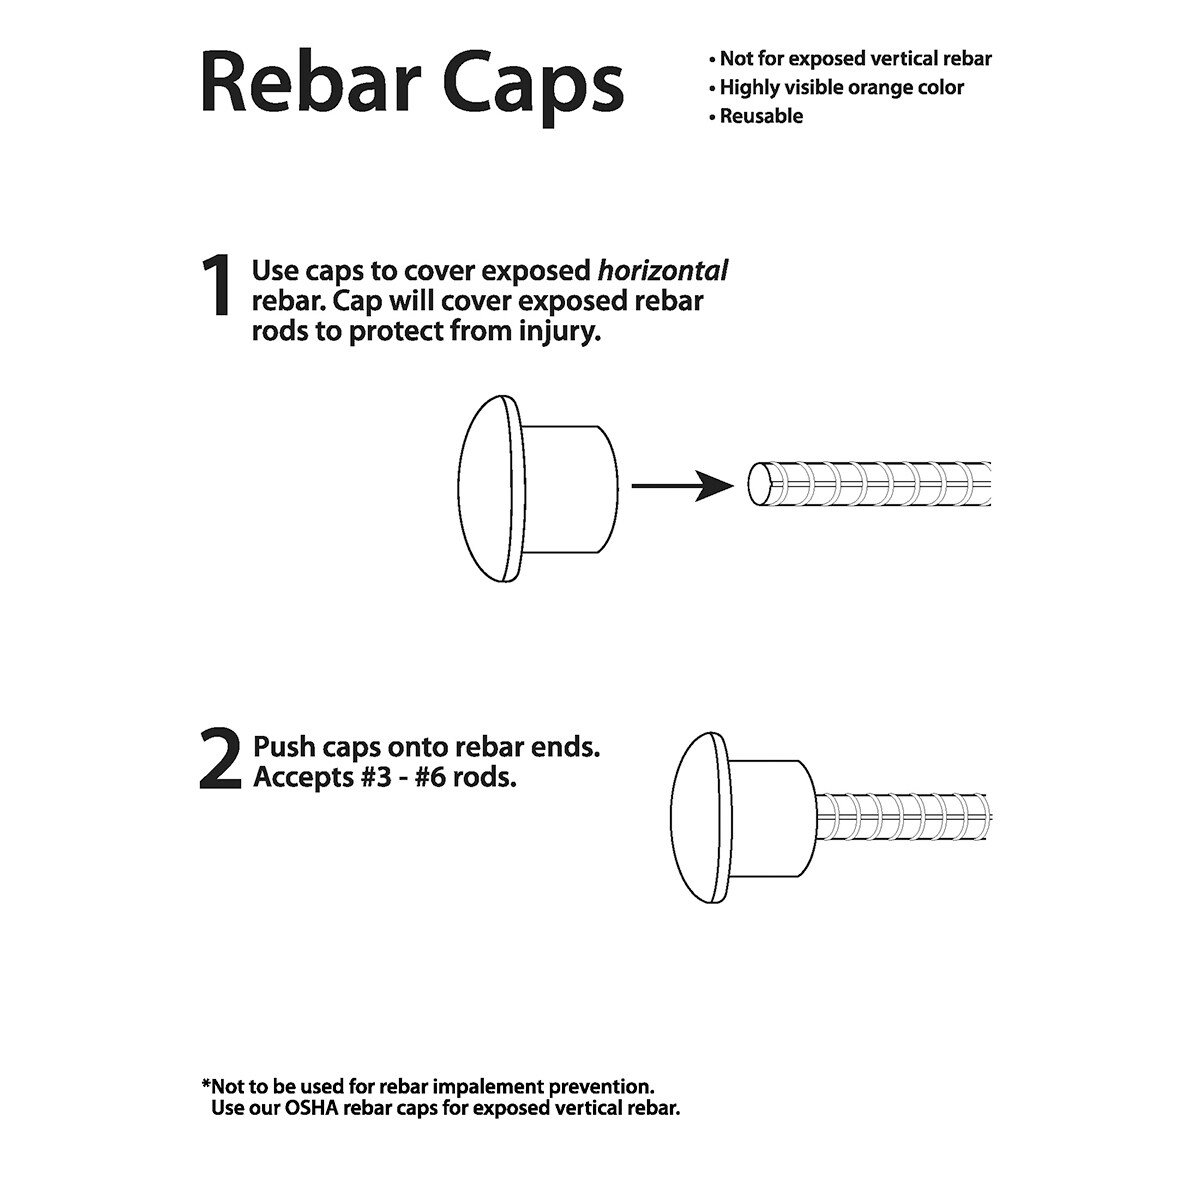 ZOENHOU 40 PCS Rebar Caps Premium Plastic Mushroom Rebar Safety Caps Tube Screw on Rebar Stakes Feet for 0.4-1.18 Inch Rebar Stake 2.36 x 2.17 Inch Orange